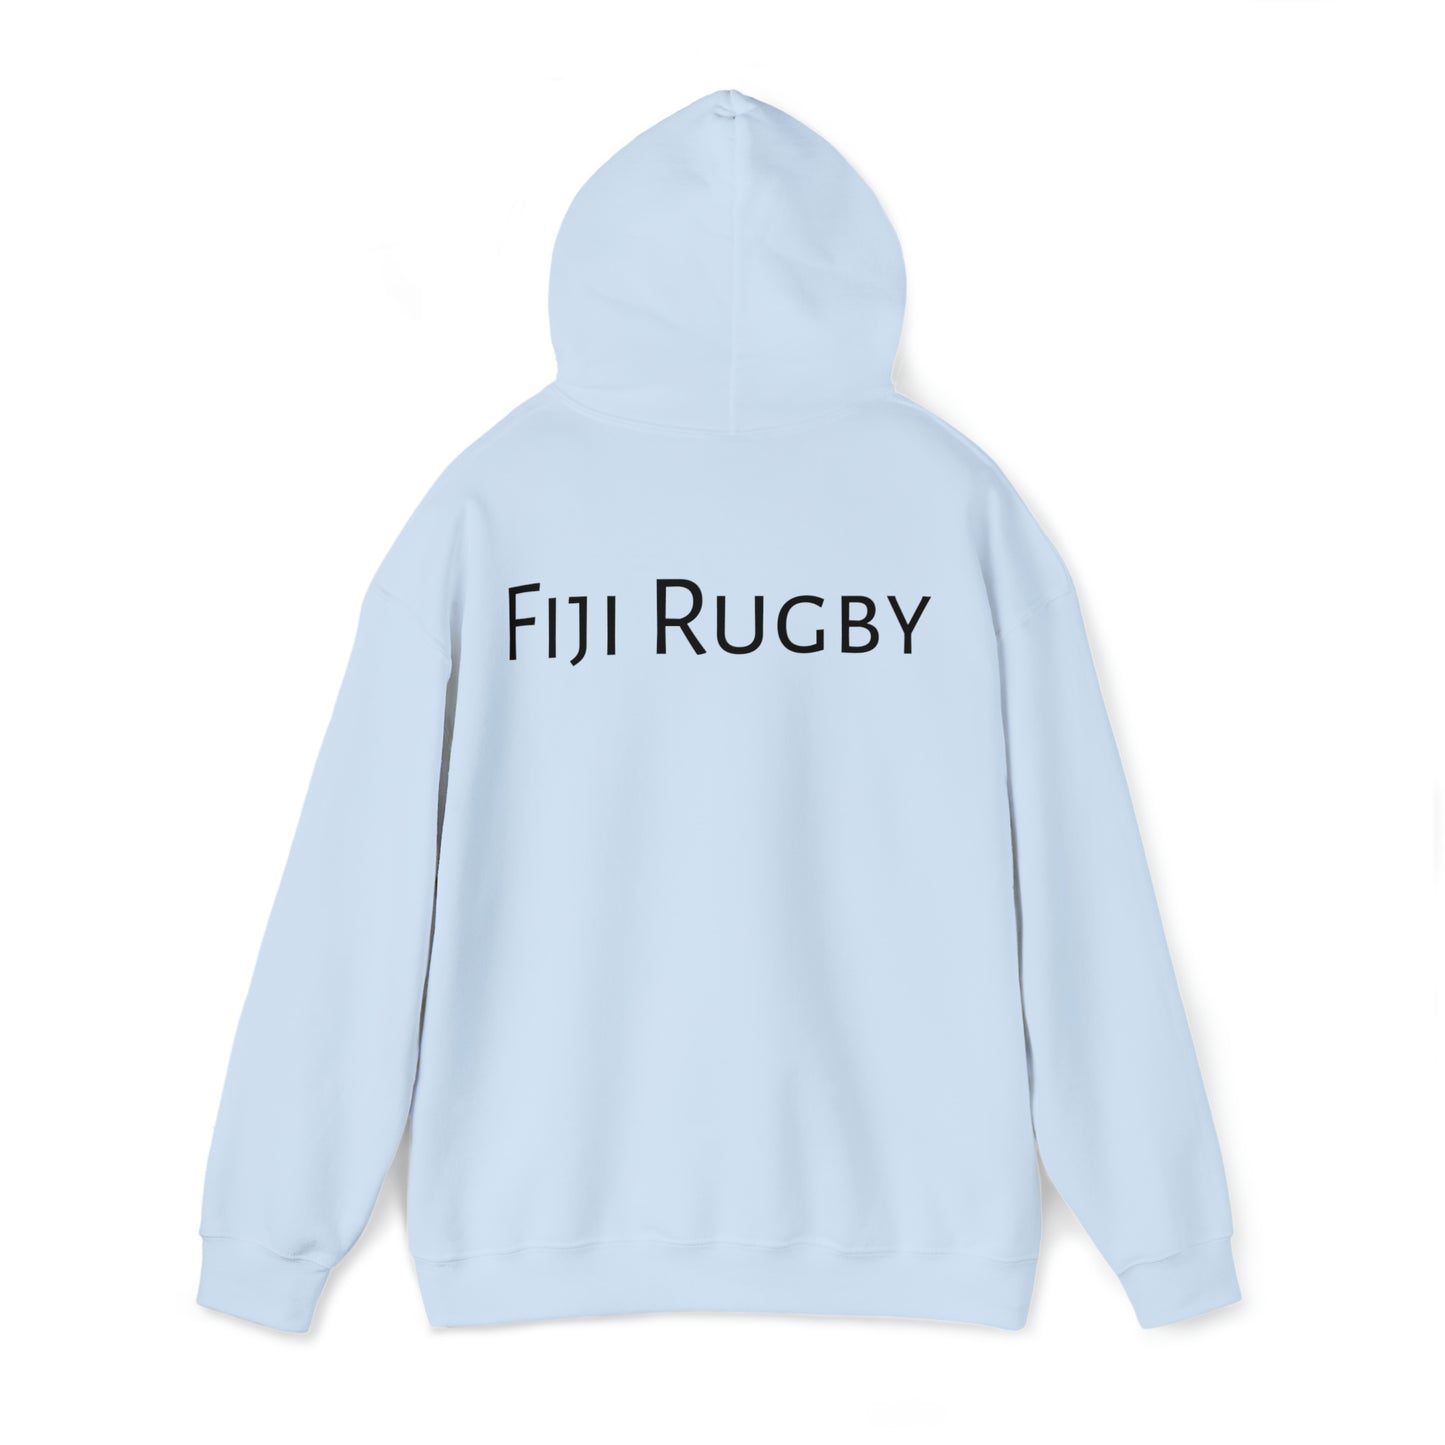 Fiji World Cup Winners - light hoodies